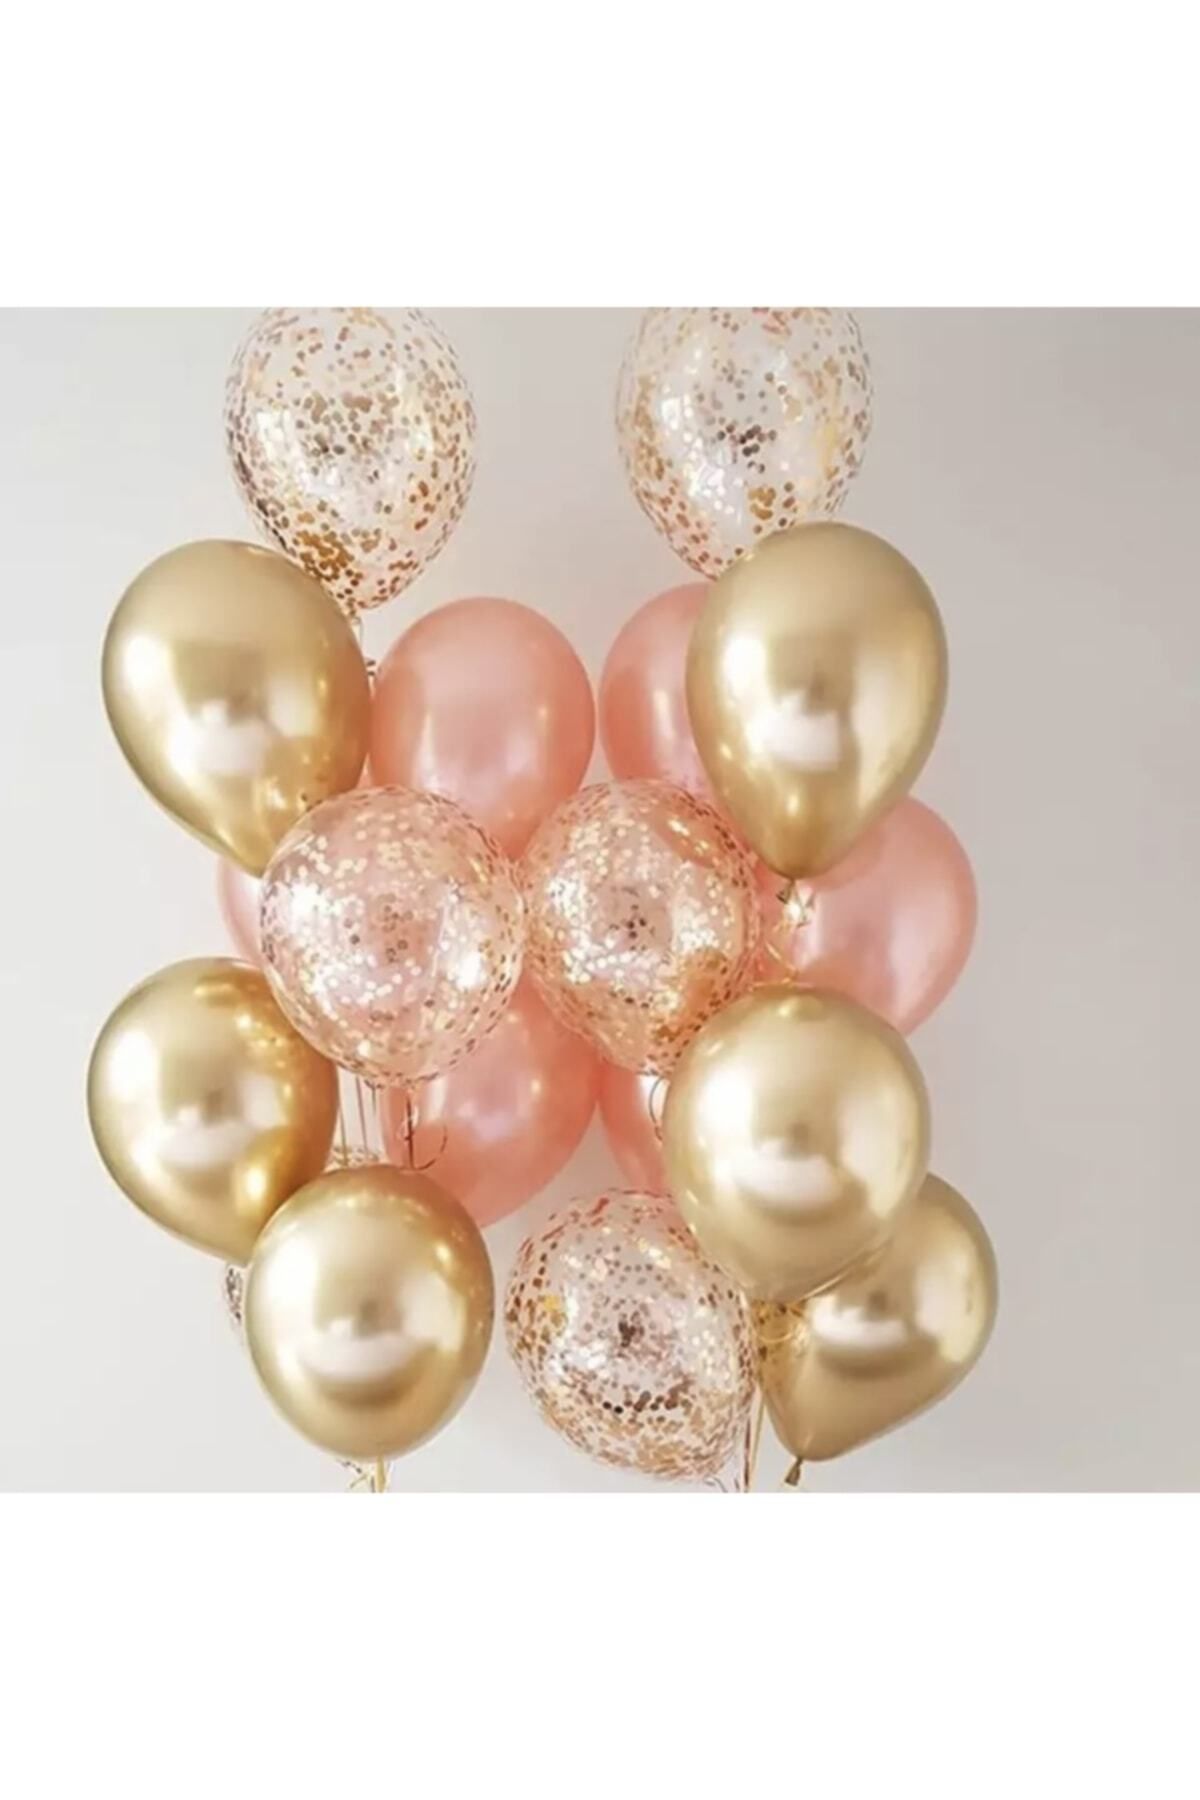 Deniz Party Store Krom Gold 6 Adet Rose Gold Metalik 6 Adet Gold Konfetili Şeffaf Balon 6 Adet Balon Set